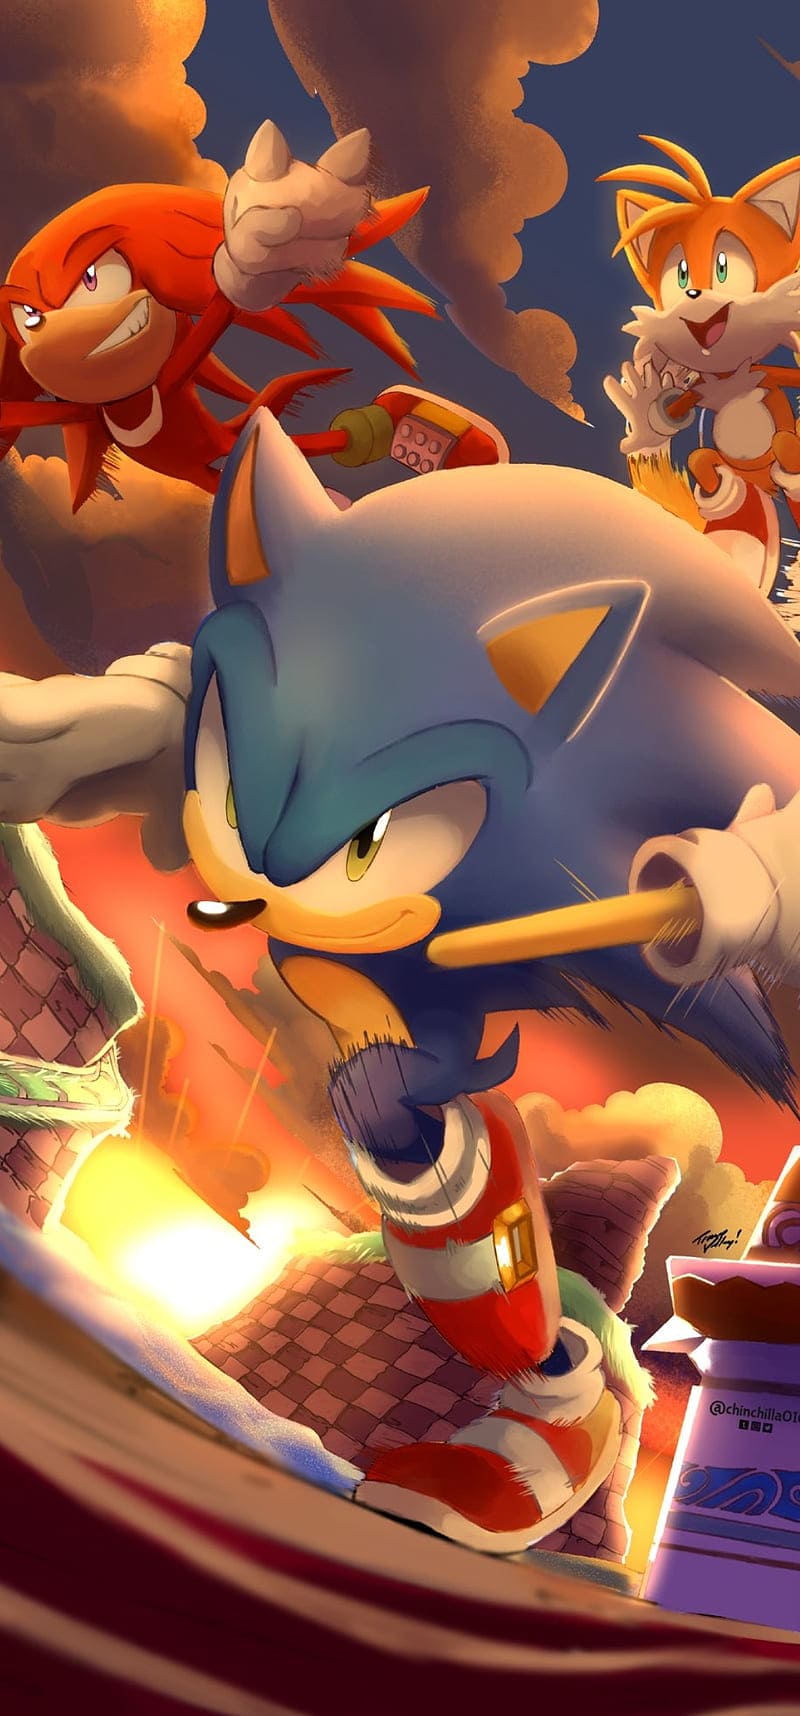 Sonic HD Wallpapers  Top 15 Best Sonic HD Wallpapers Download